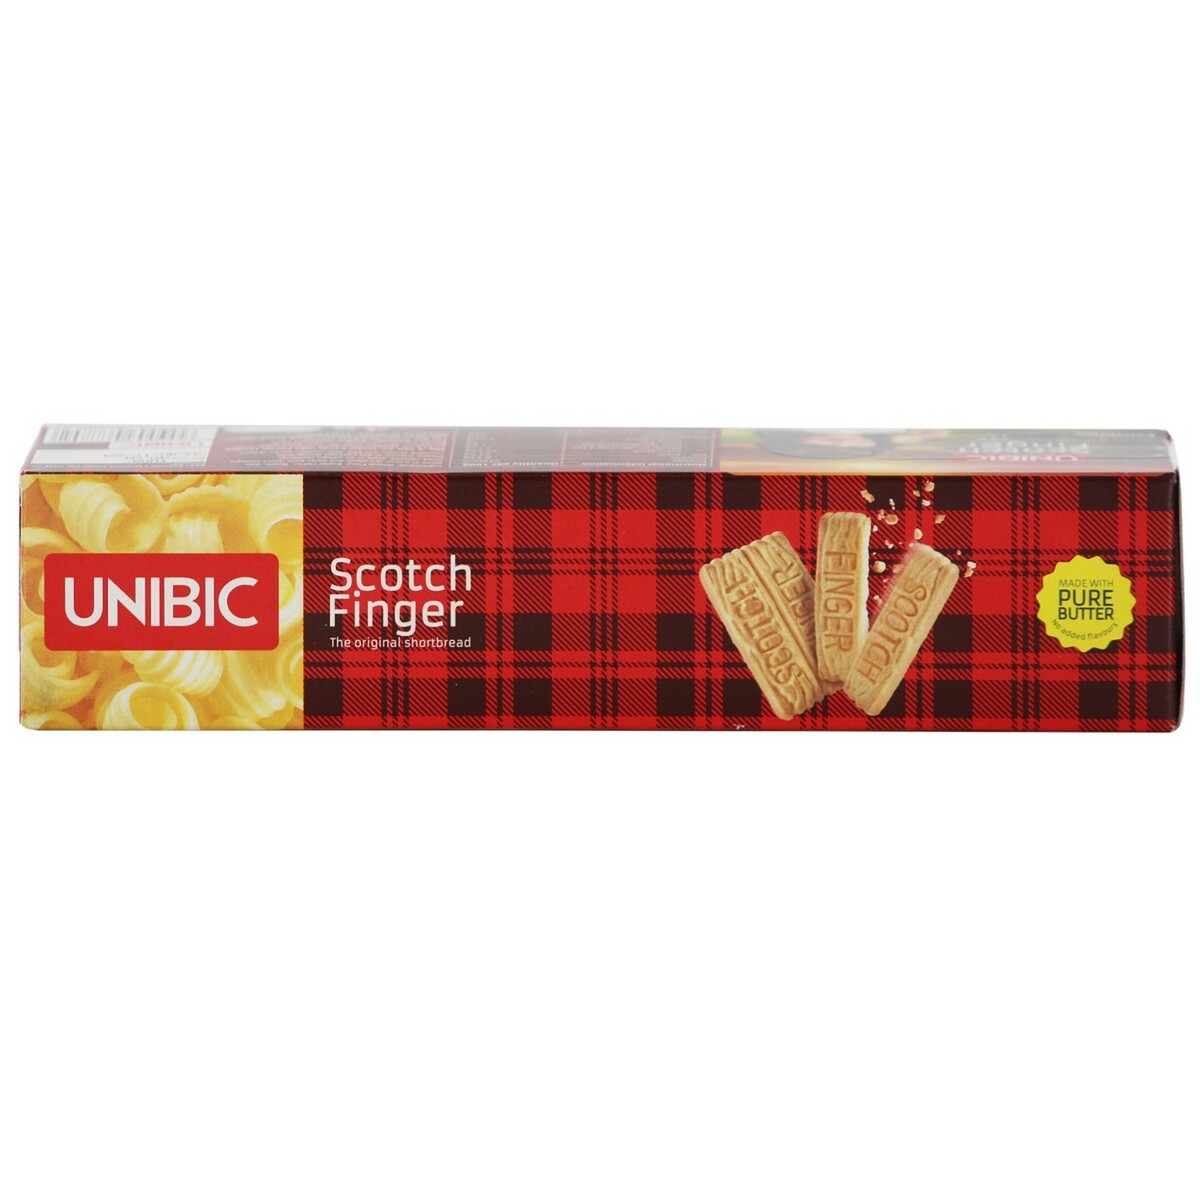 Unibic shortbread scotch finger 100g